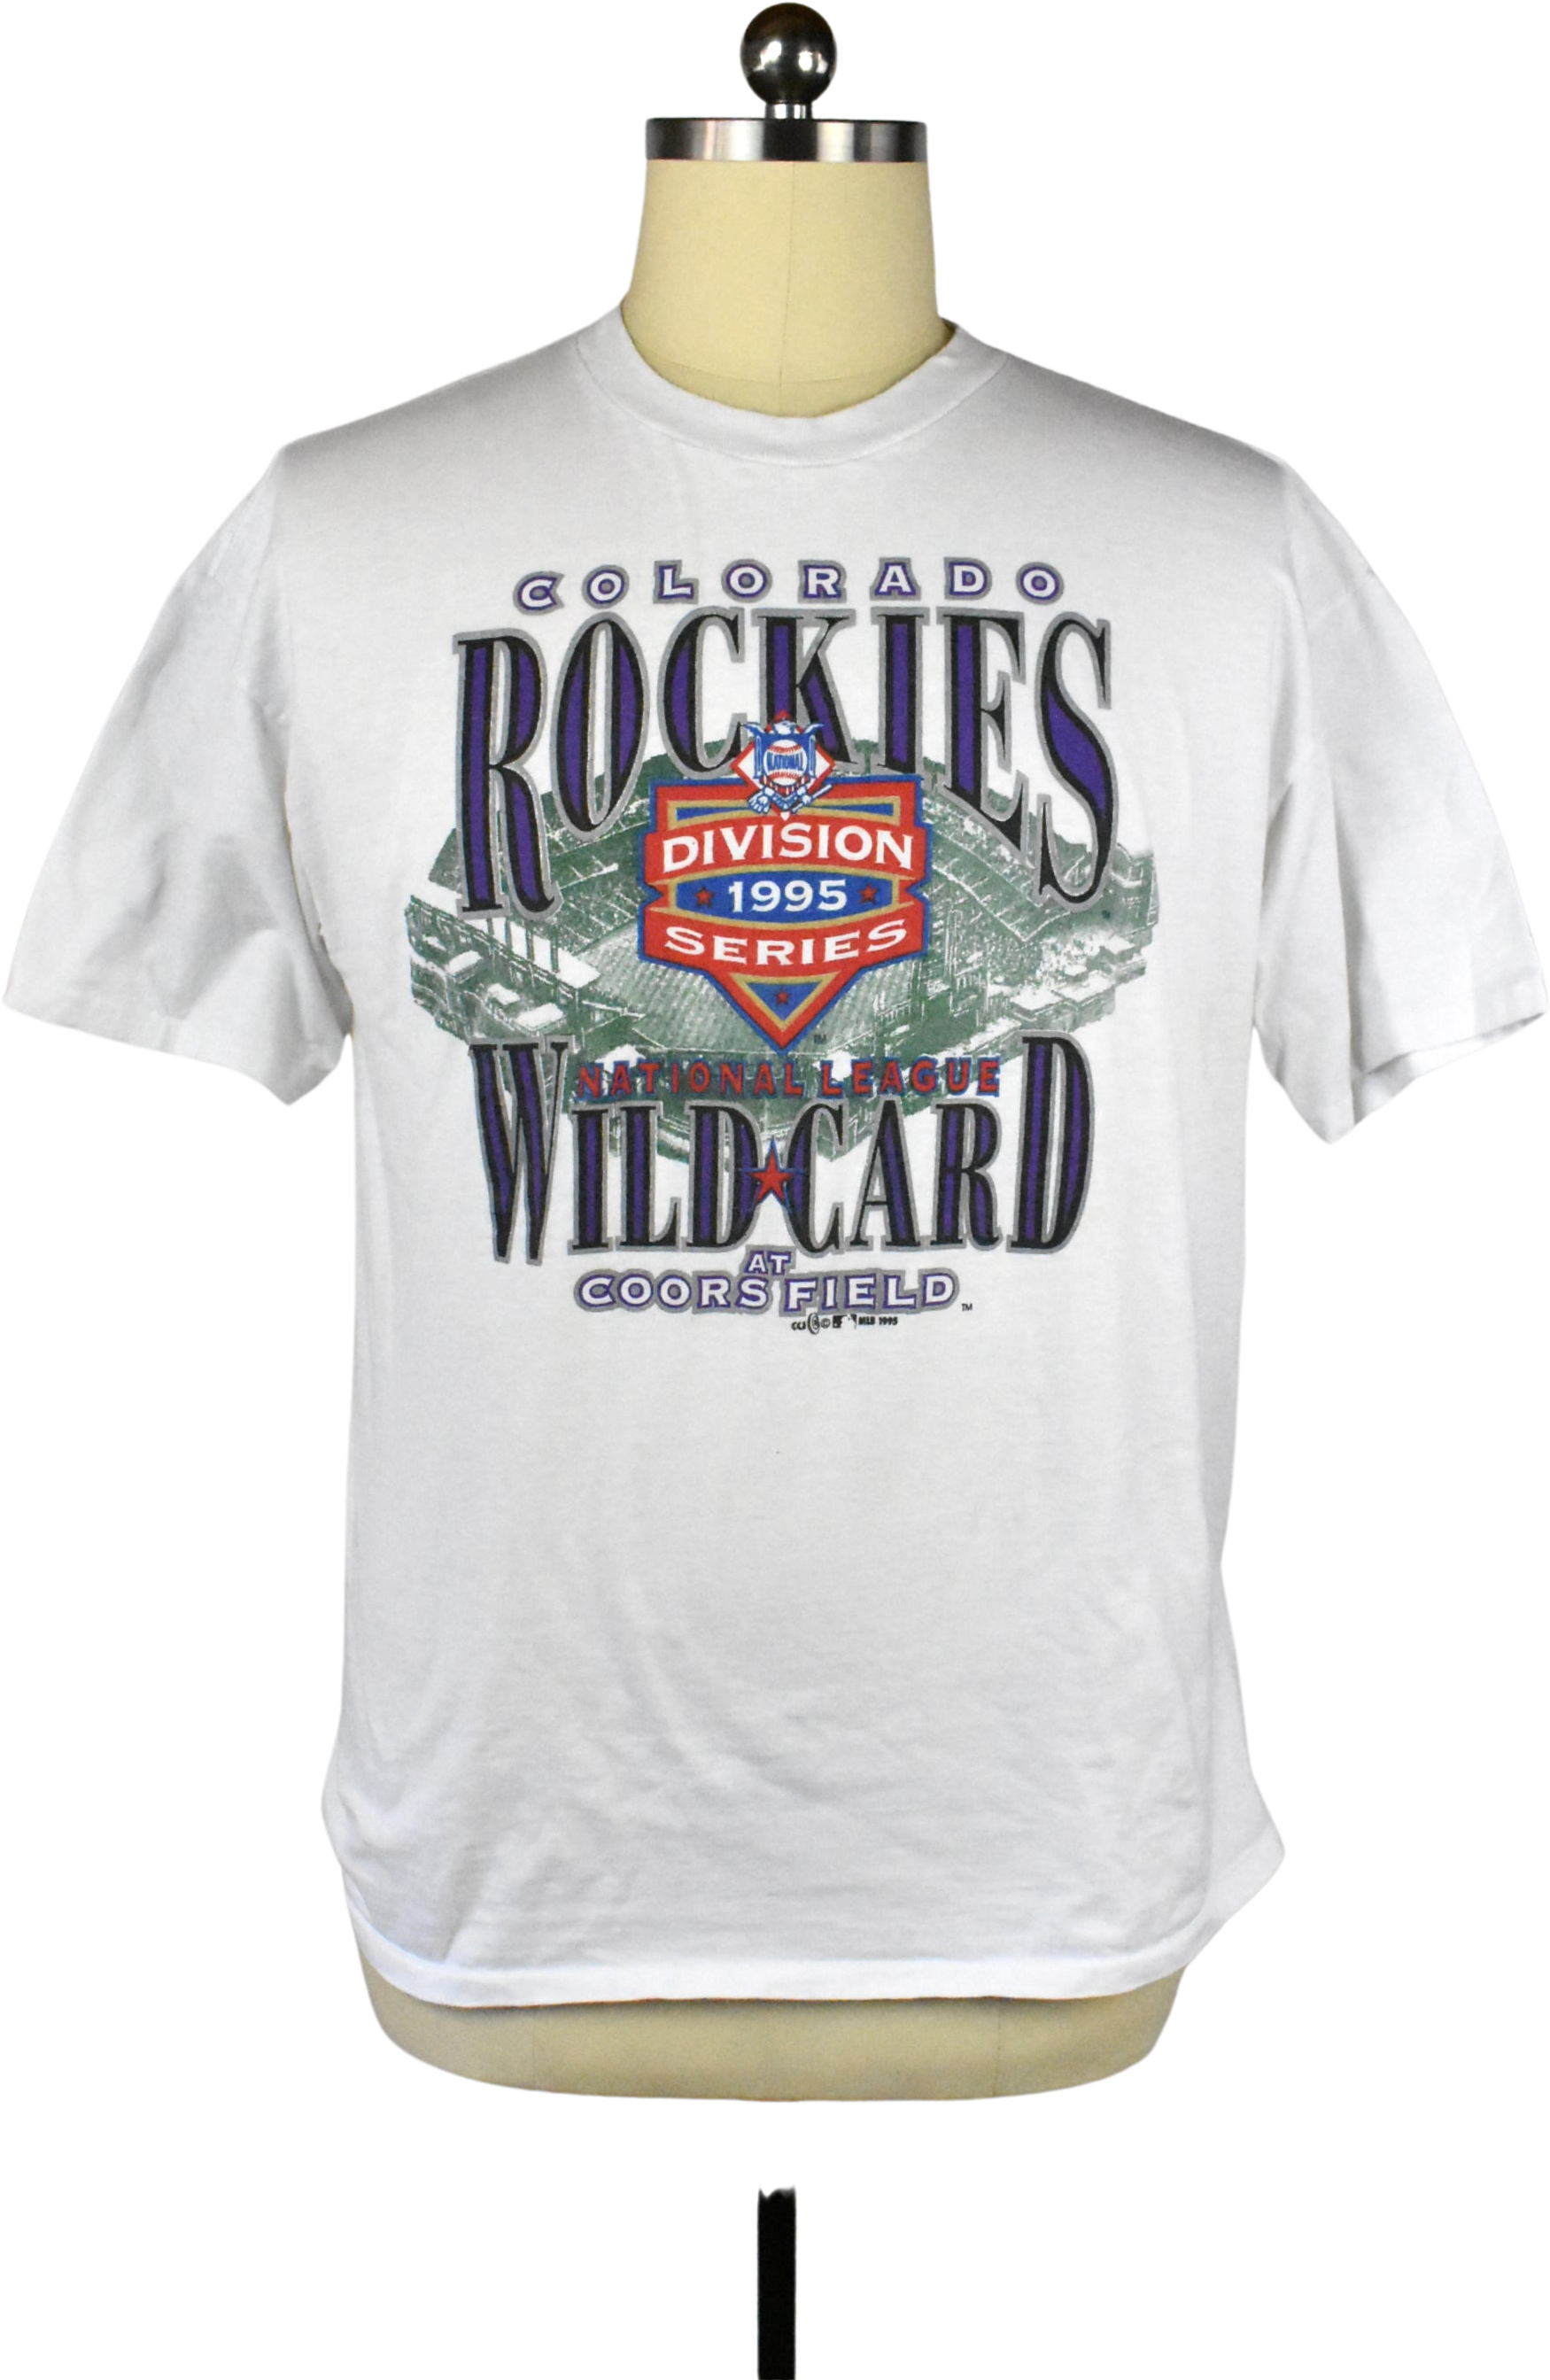 Vintage 1995 Colorado Rockies Wild Card T-Shirt by Oneita